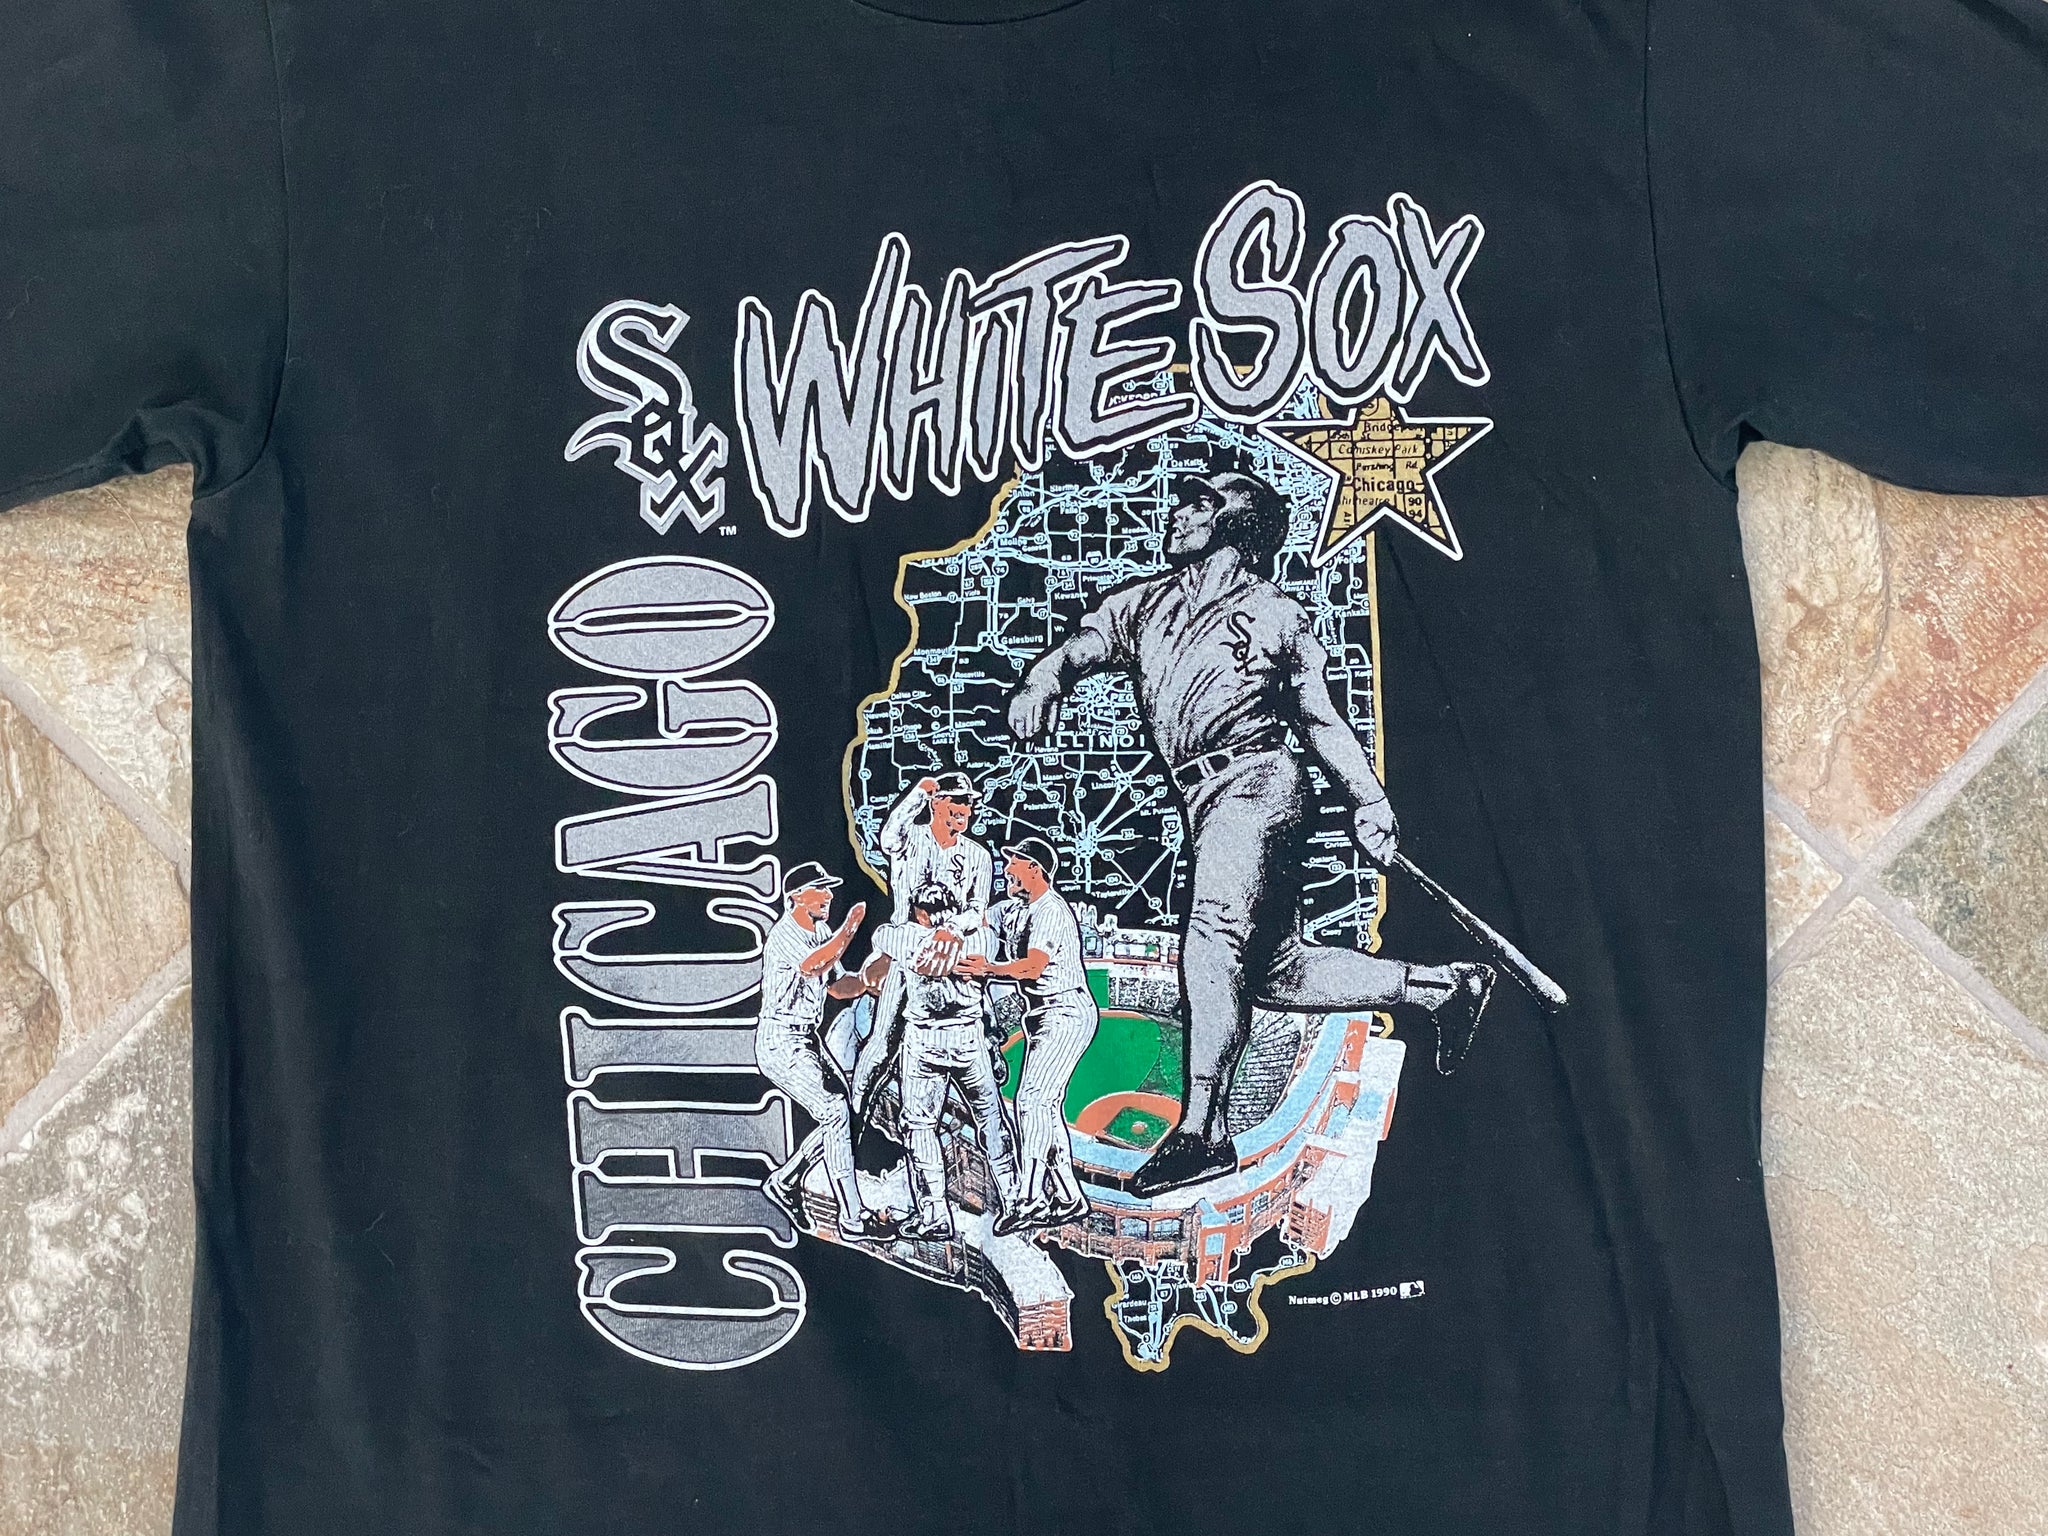 Vintage Boston Red Sox Nutmeg T-Shirt